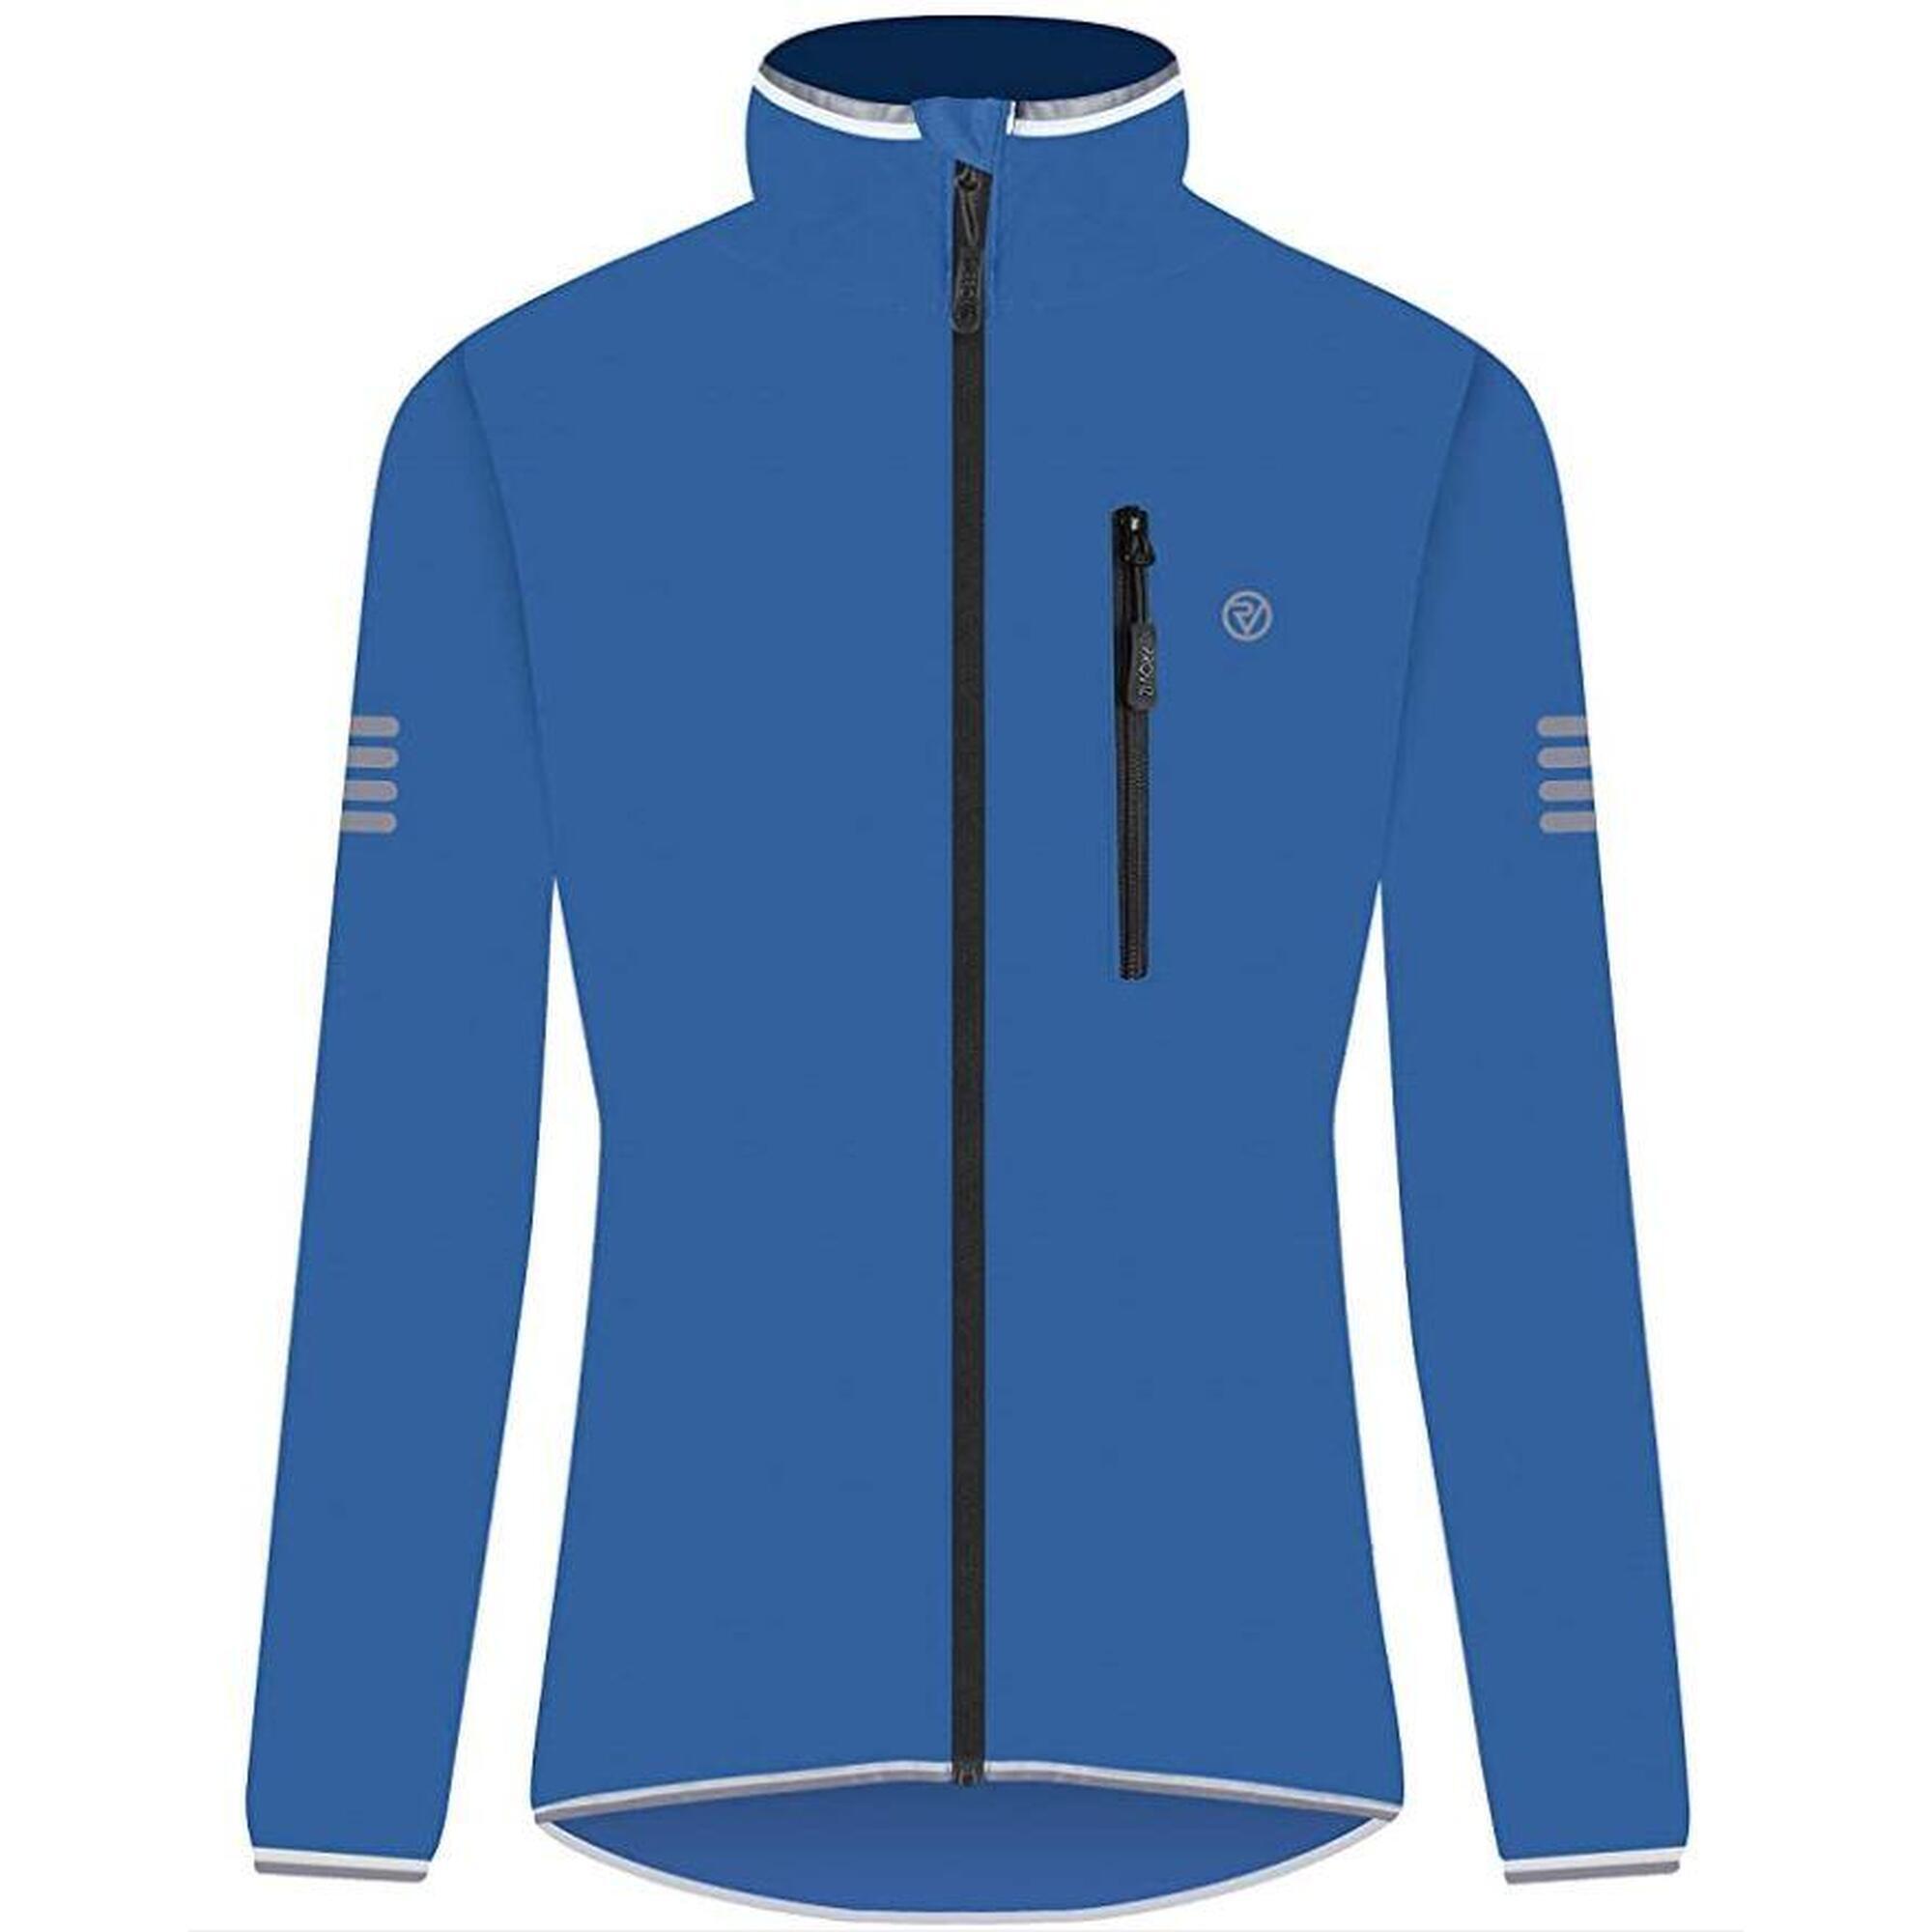 Proviz Reflective Lightweight Unisex Waterproof Hooded Cycling Jacket 1/7